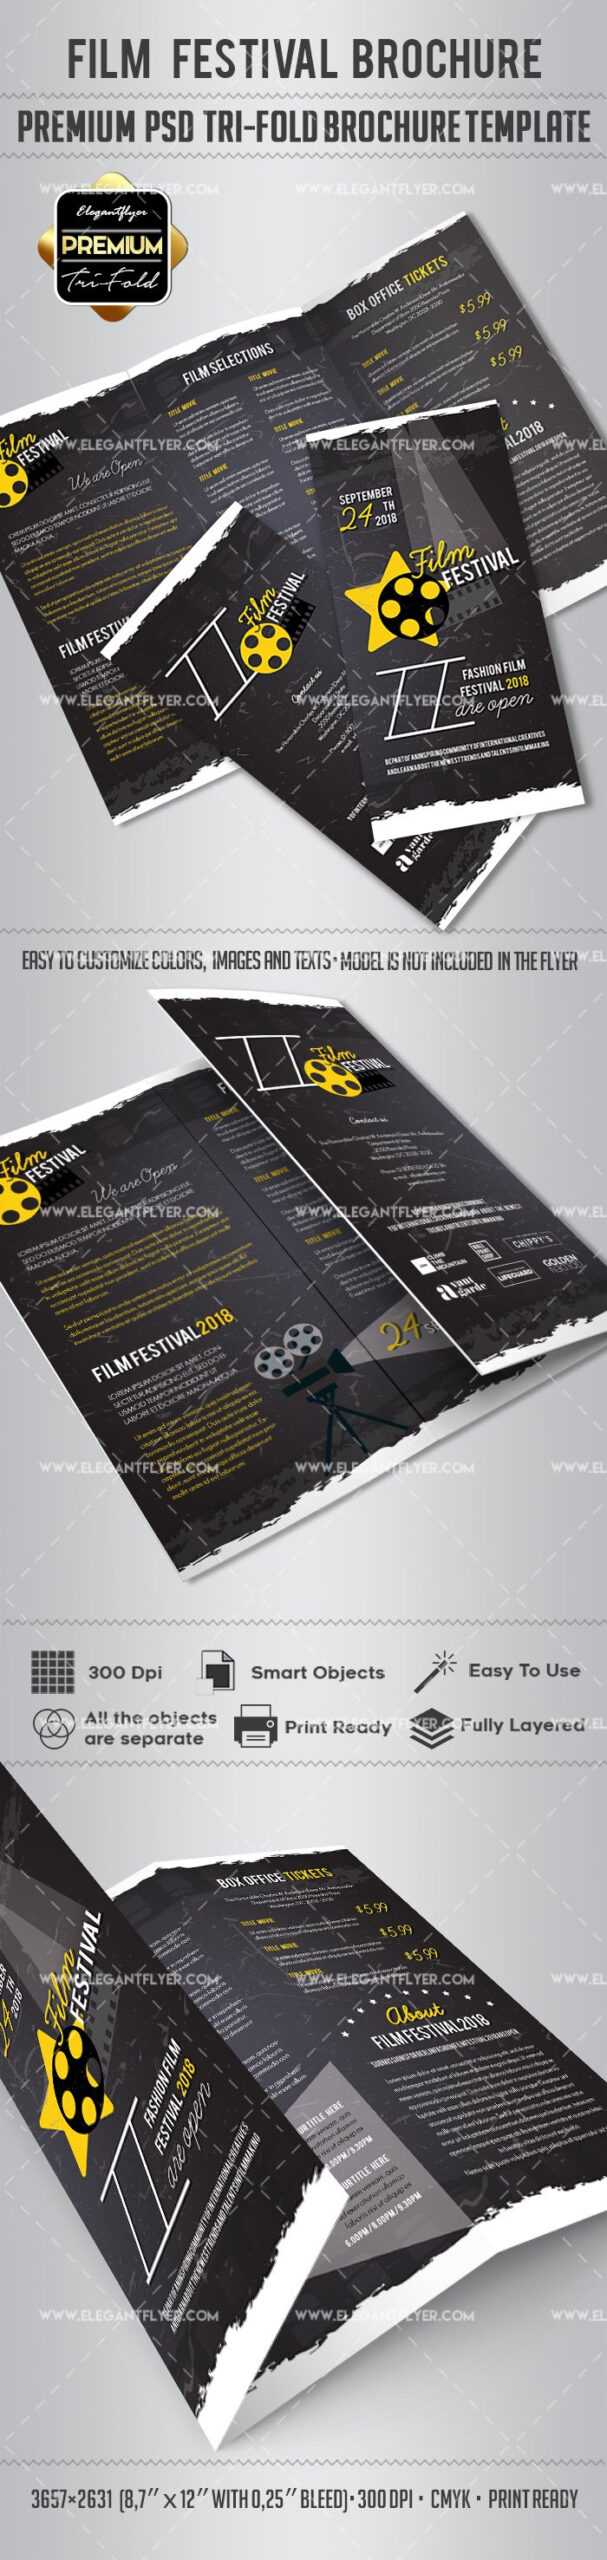 Film Festival Brochure Design Within Film Festival Brochure Template